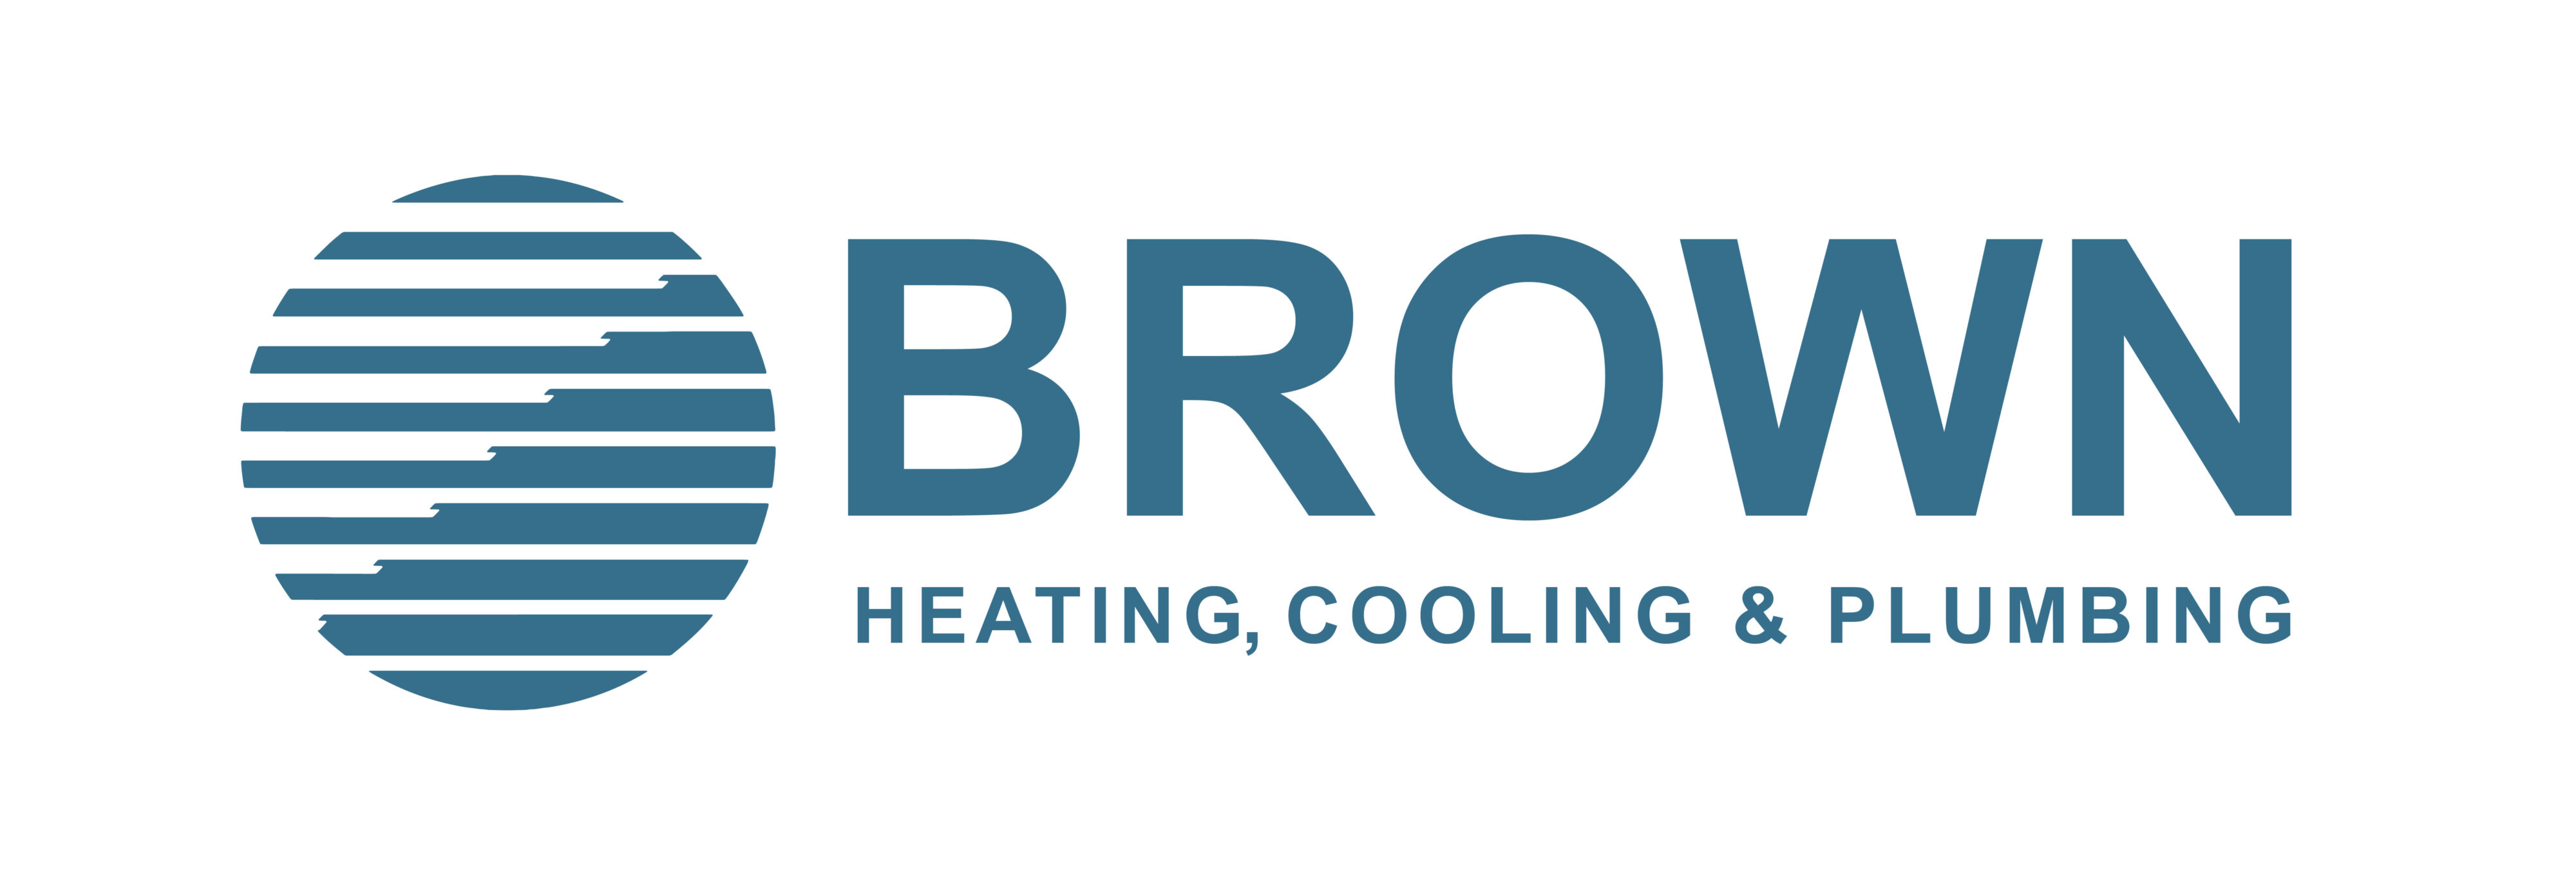 Brown Heating, Cooling & Plumbing